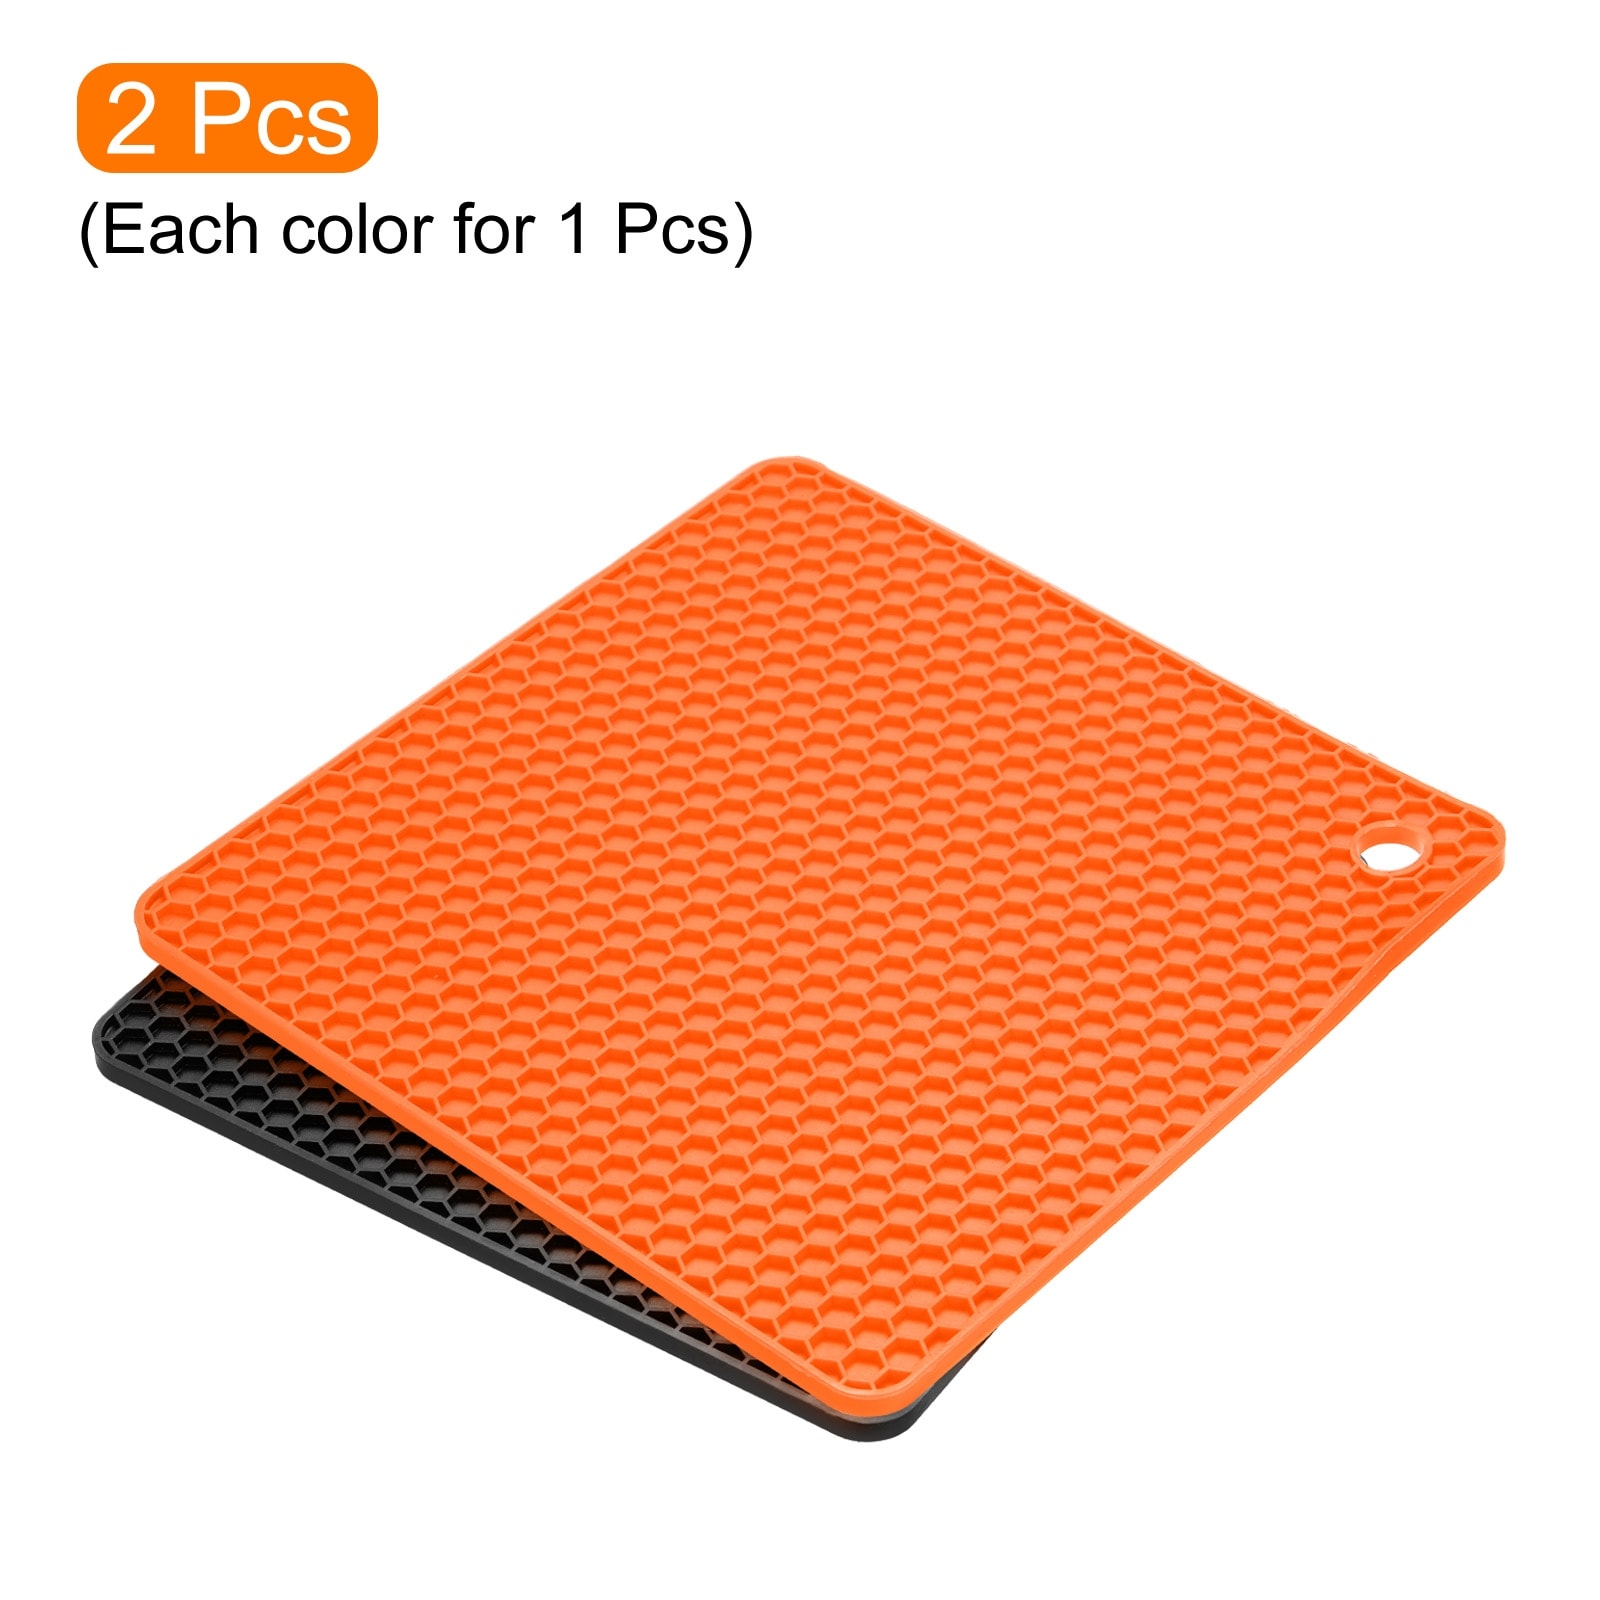 https://ak1.ostkcdn.com/images/products/is/images/direct/536da1aa672a3e05b0c9a2b86761e4d0bc2e3ceb/Silicone-Trivet-Mats-2pcs%2C-Square-Hot-Pan-Pads-Hot-Pot-Holder--Black%2C-Orange.jpg